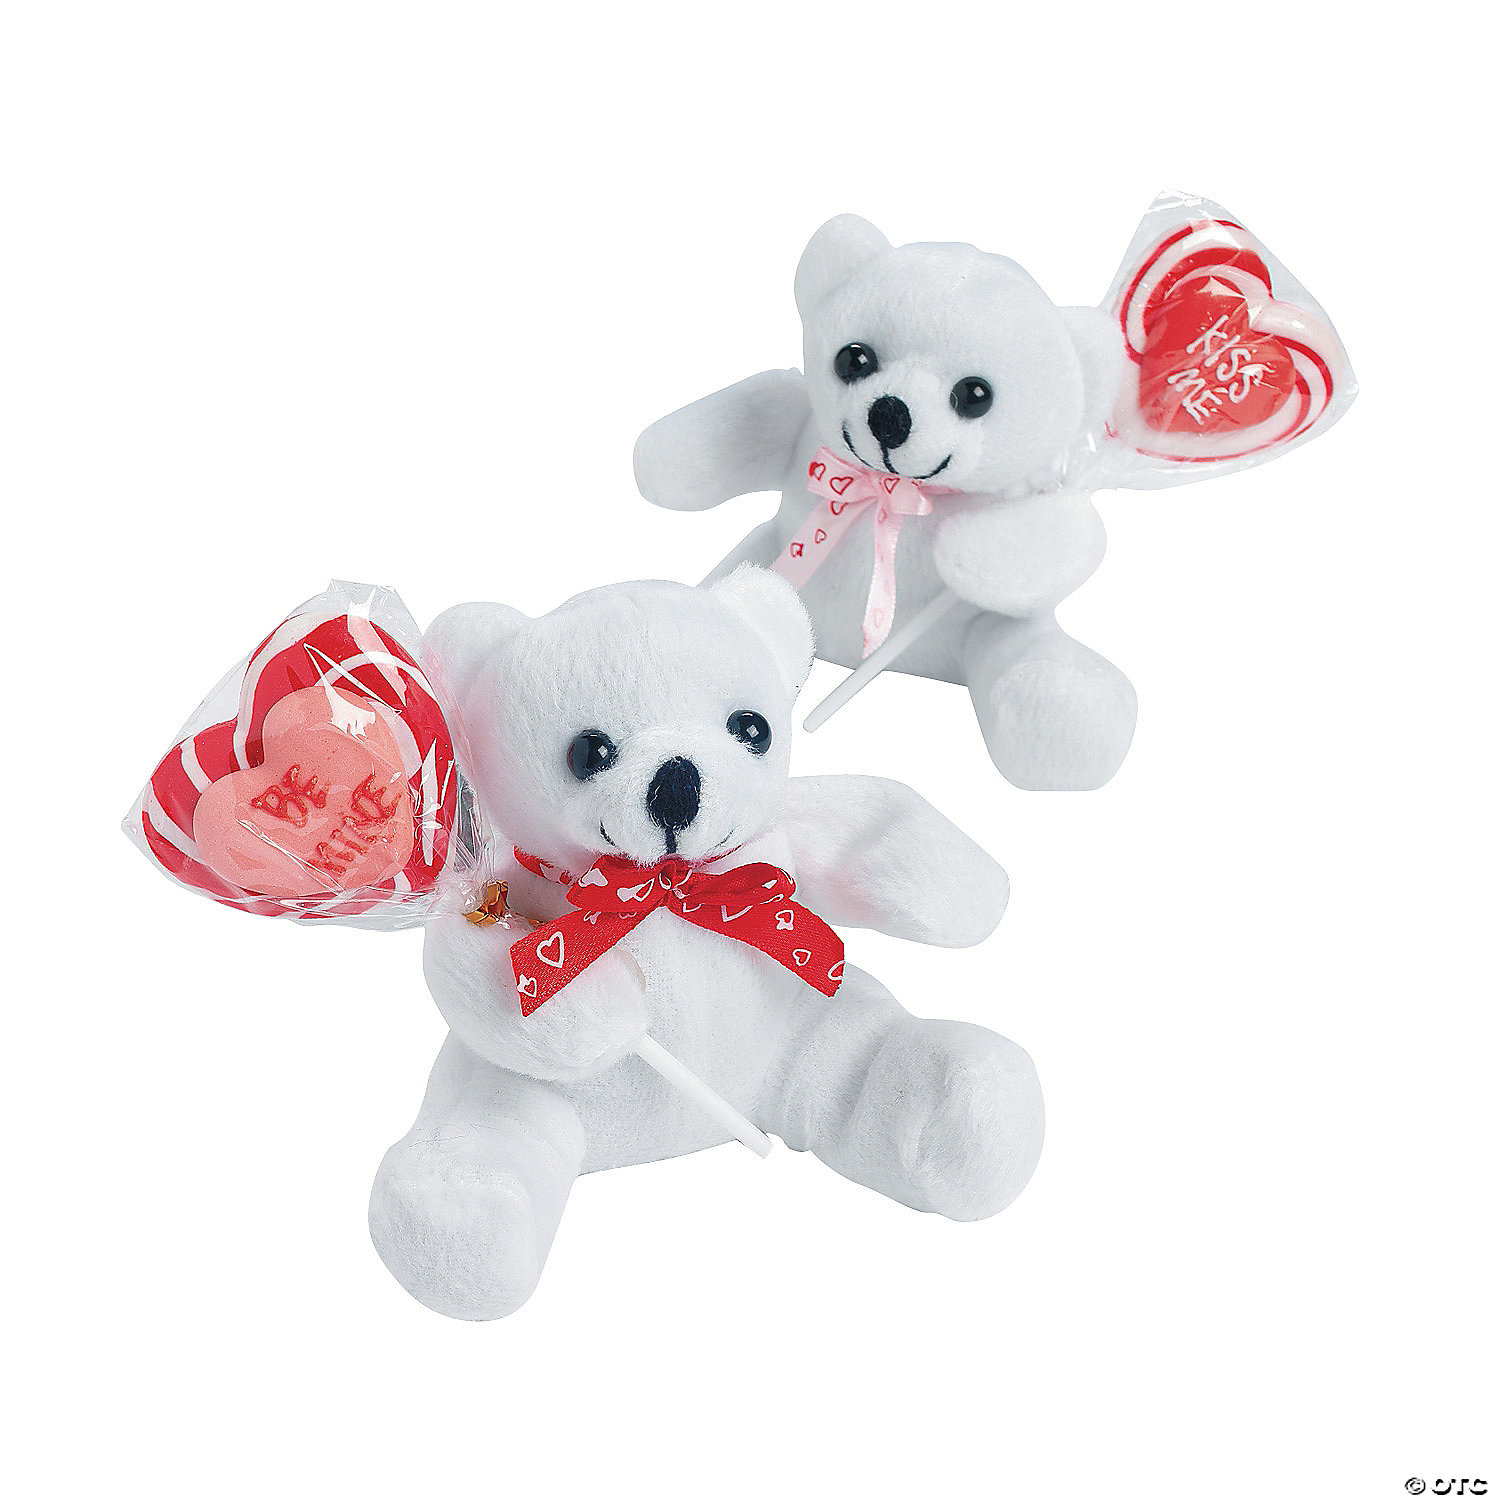 cute valentines stuffed animals